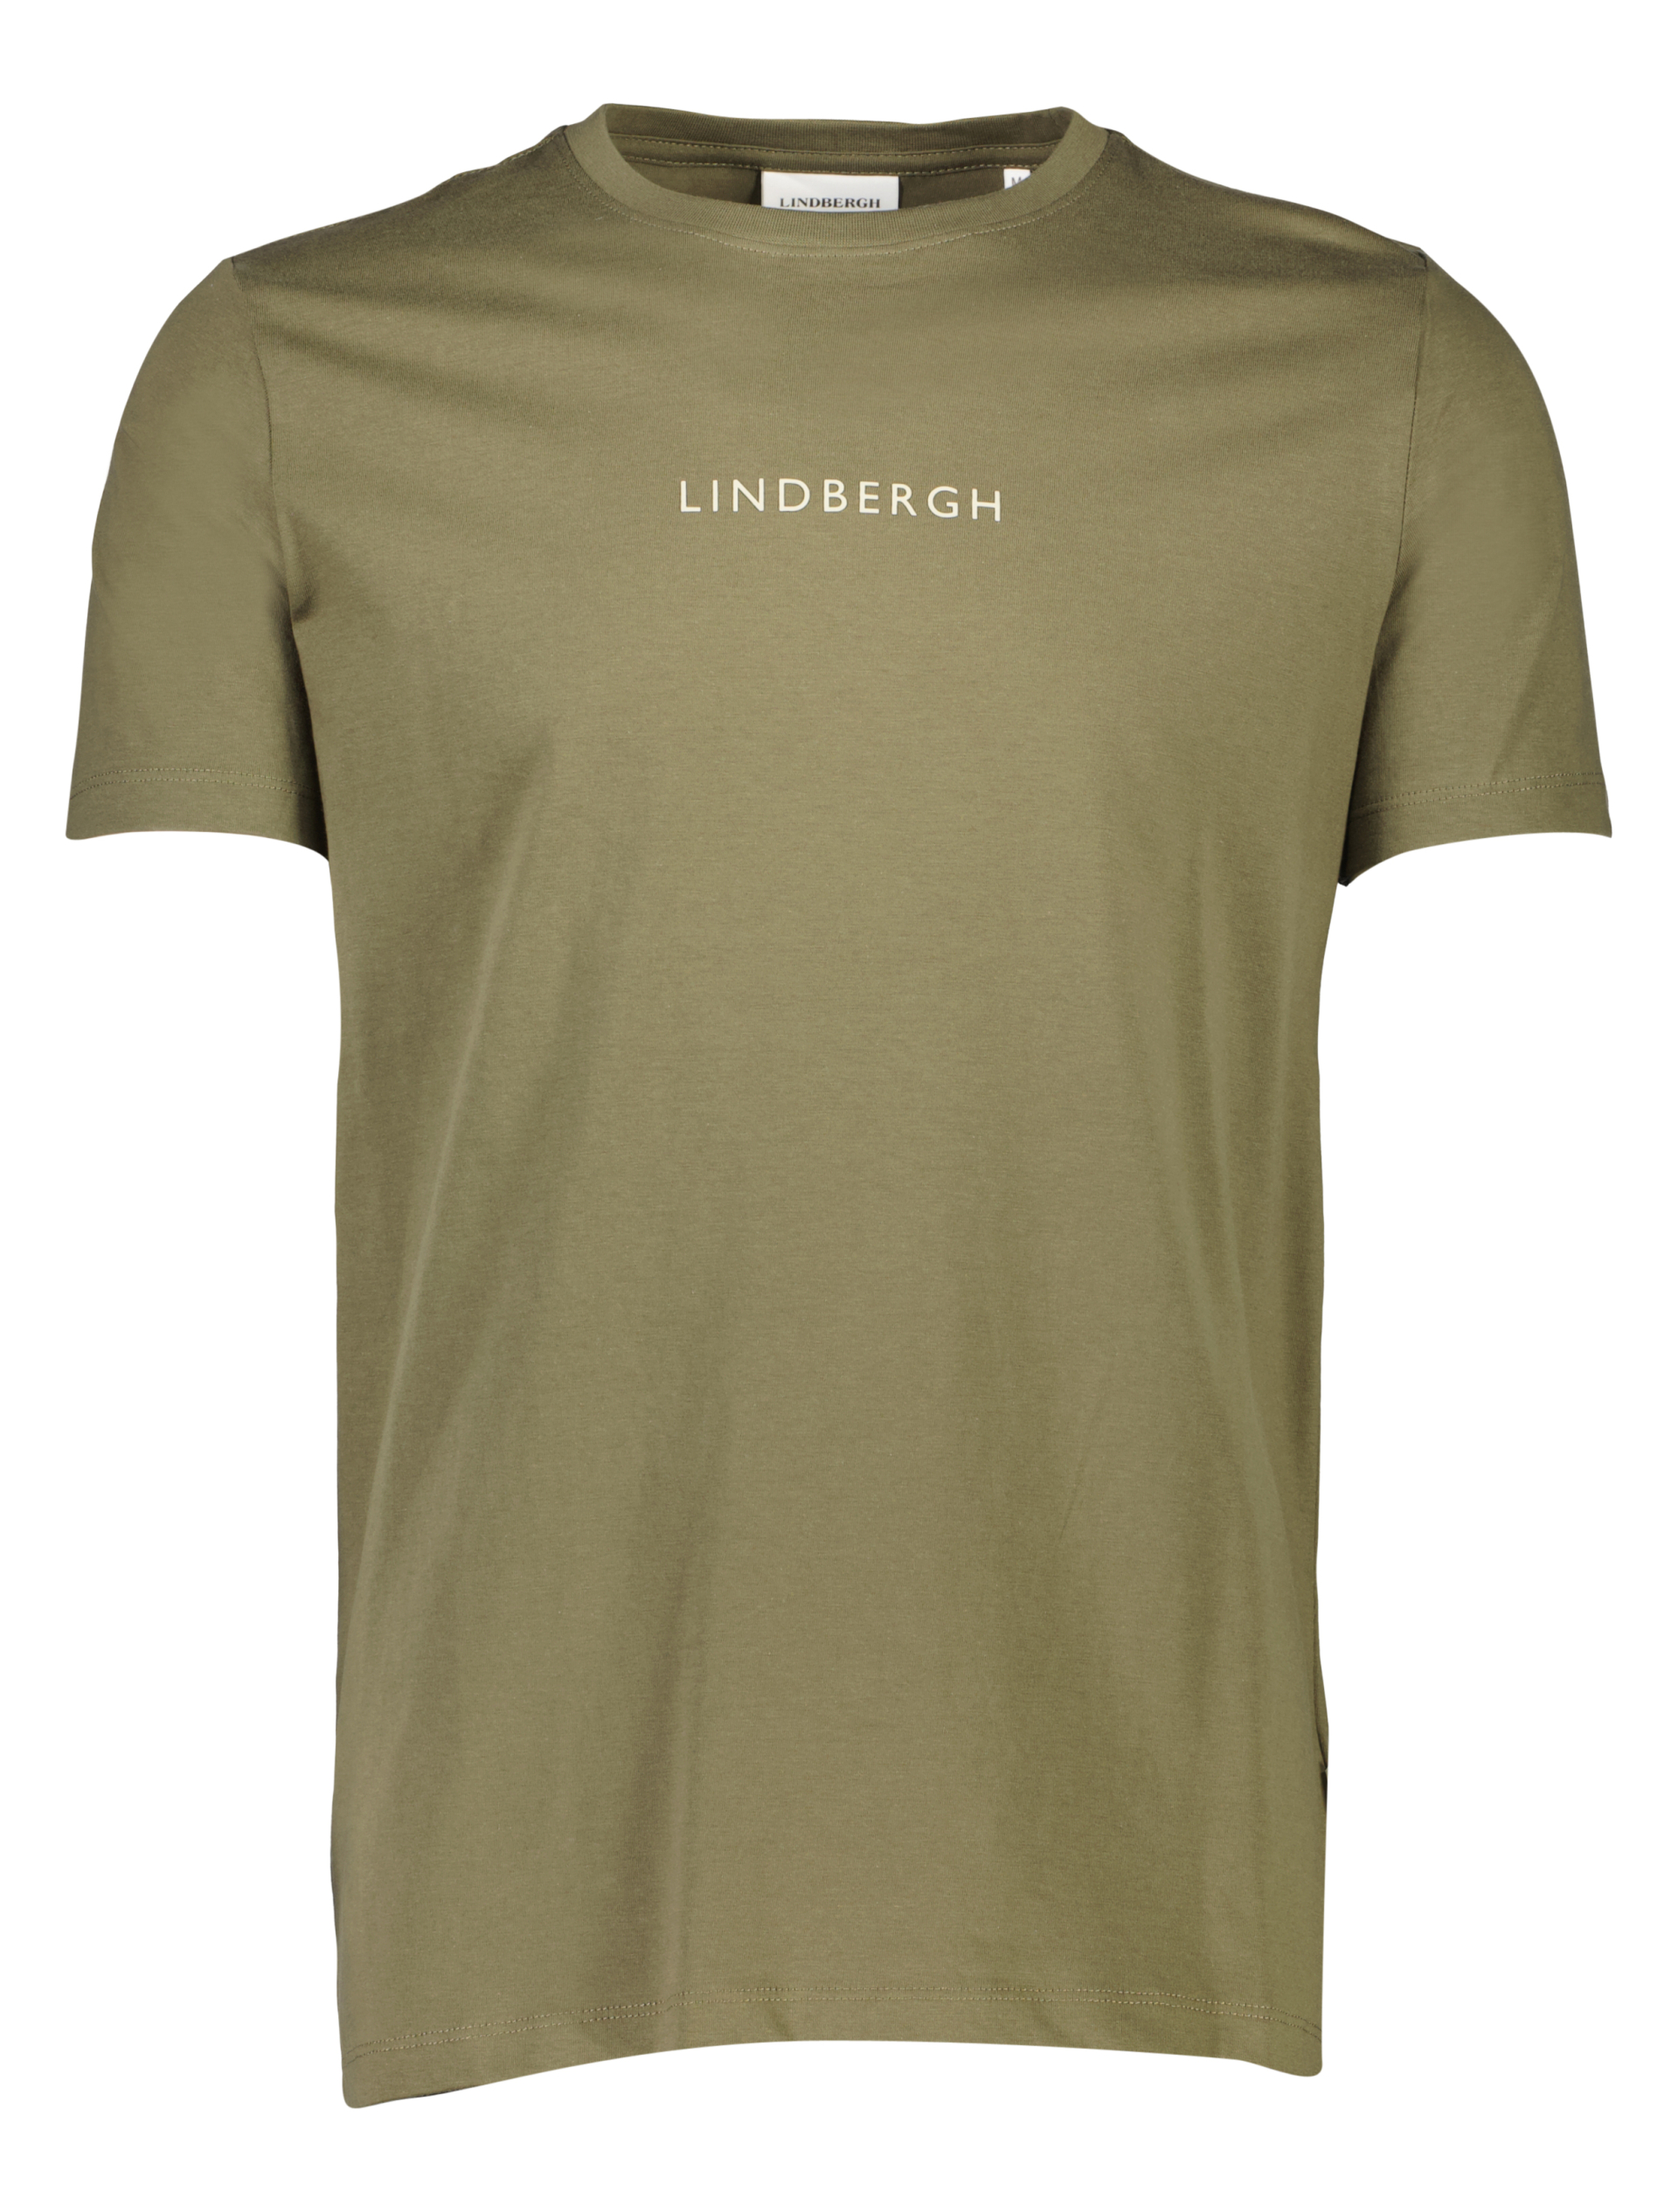 Lindbergh Tee green / lt army